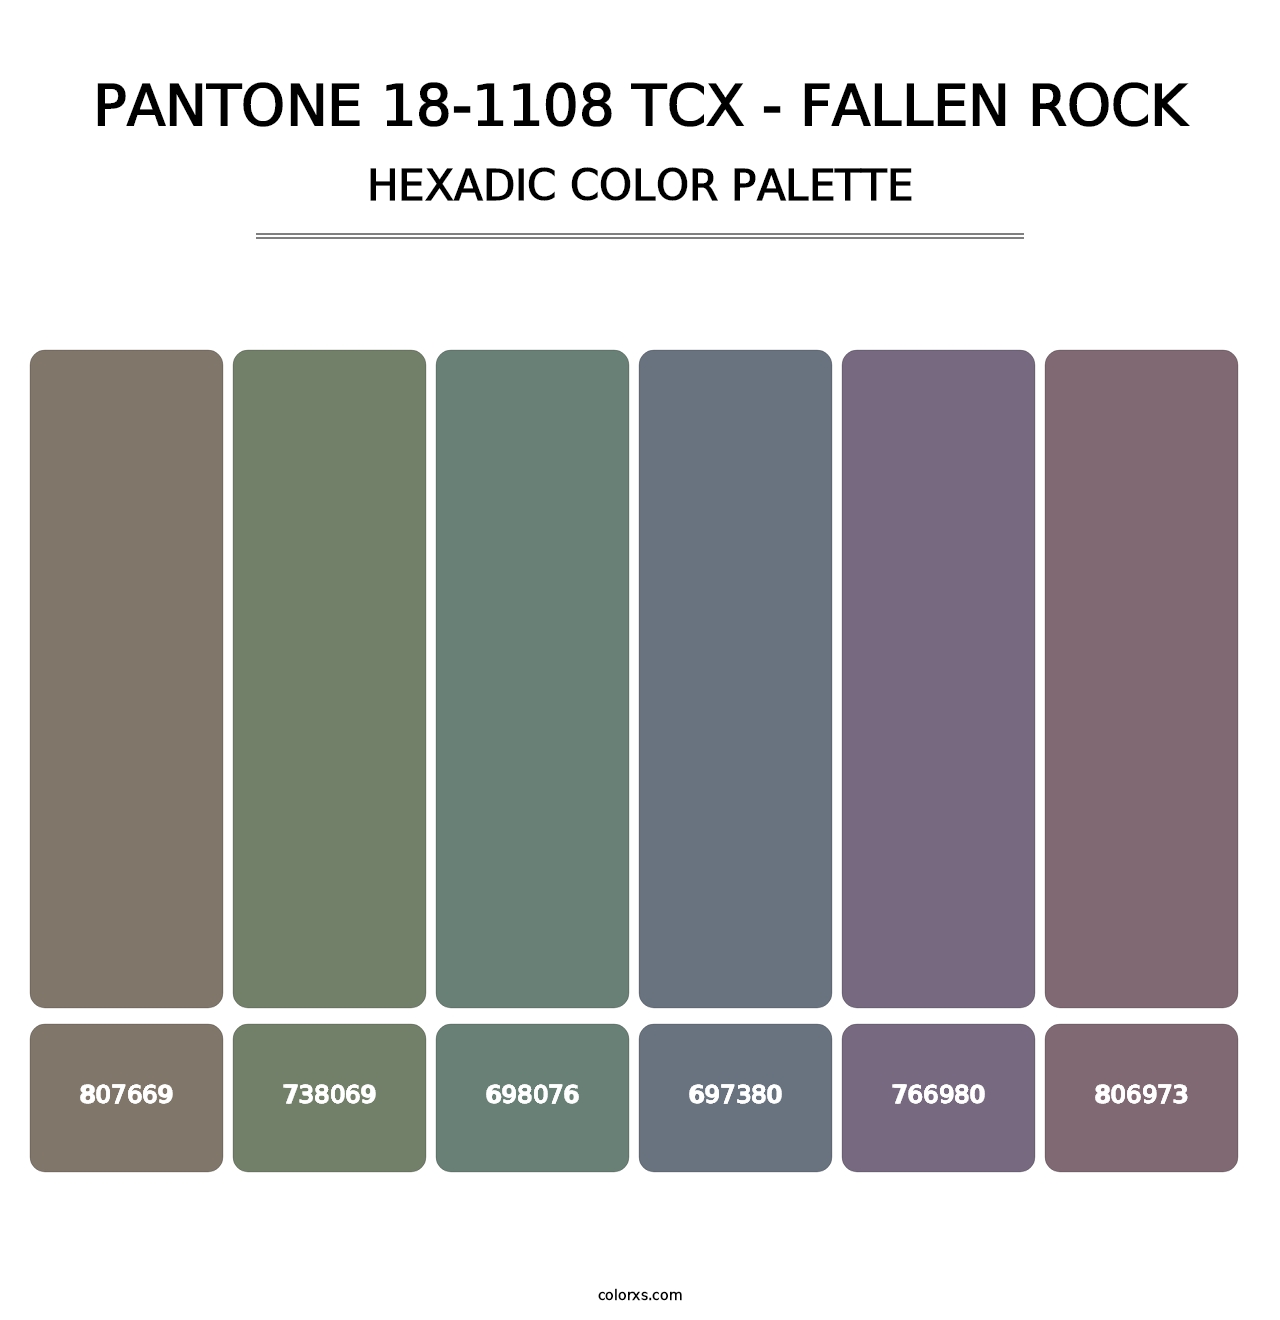 PANTONE 18-1108 TCX - Fallen Rock - Hexadic Color Palette